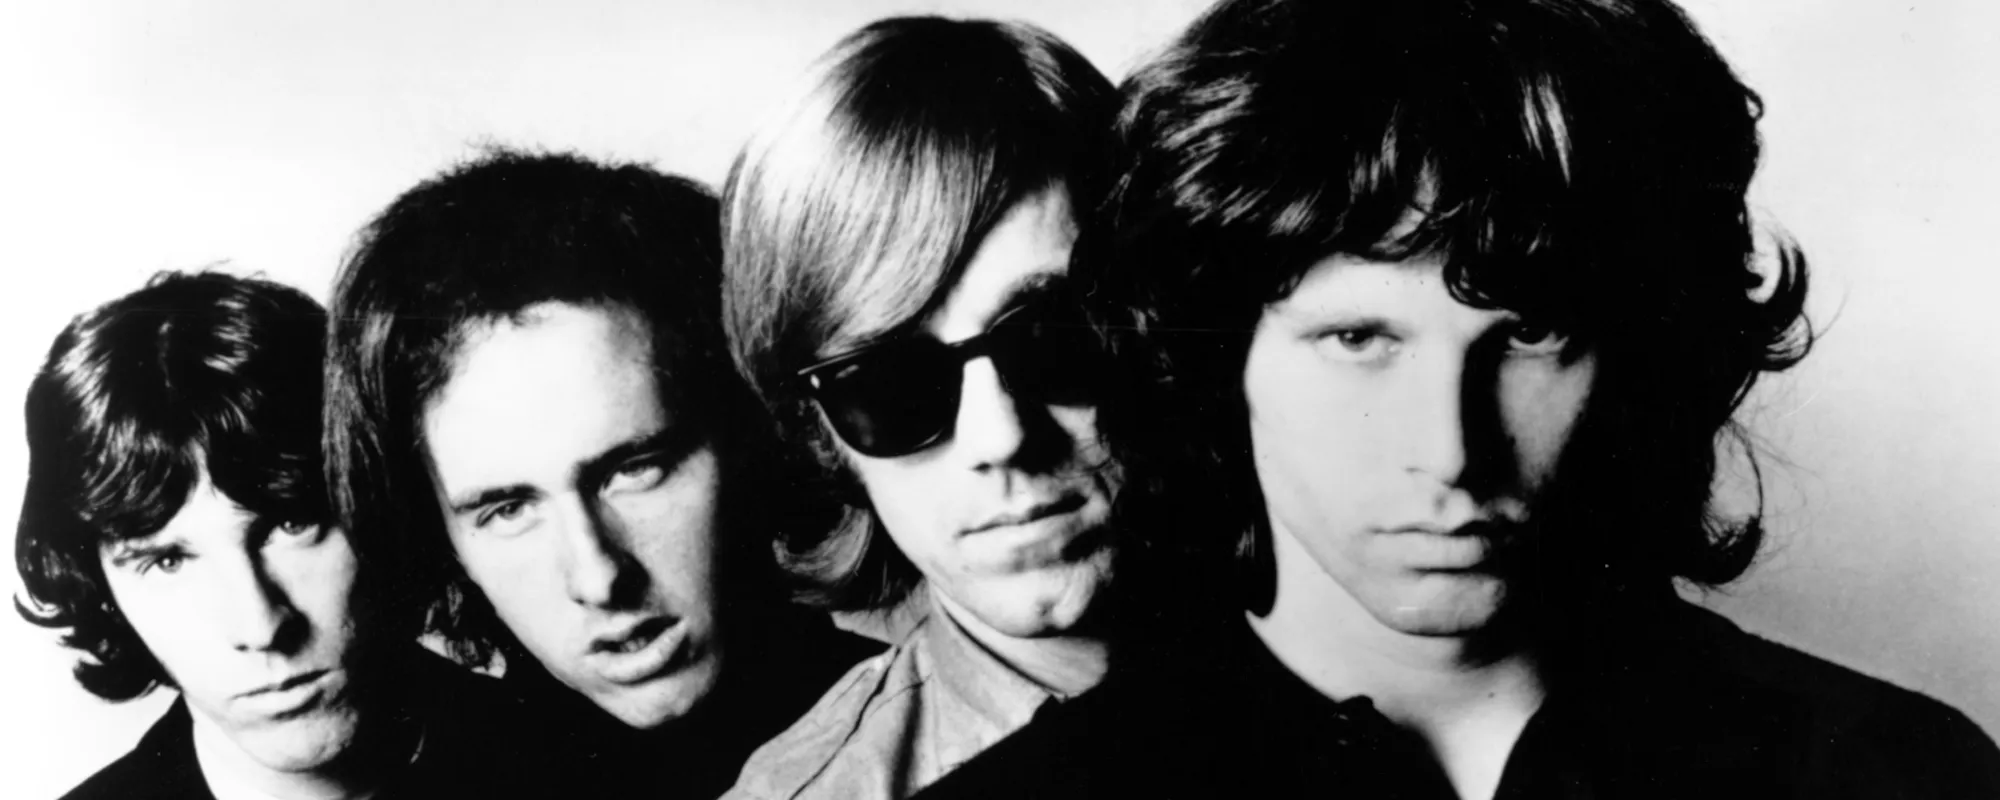 The Top 10 The Doors Songs